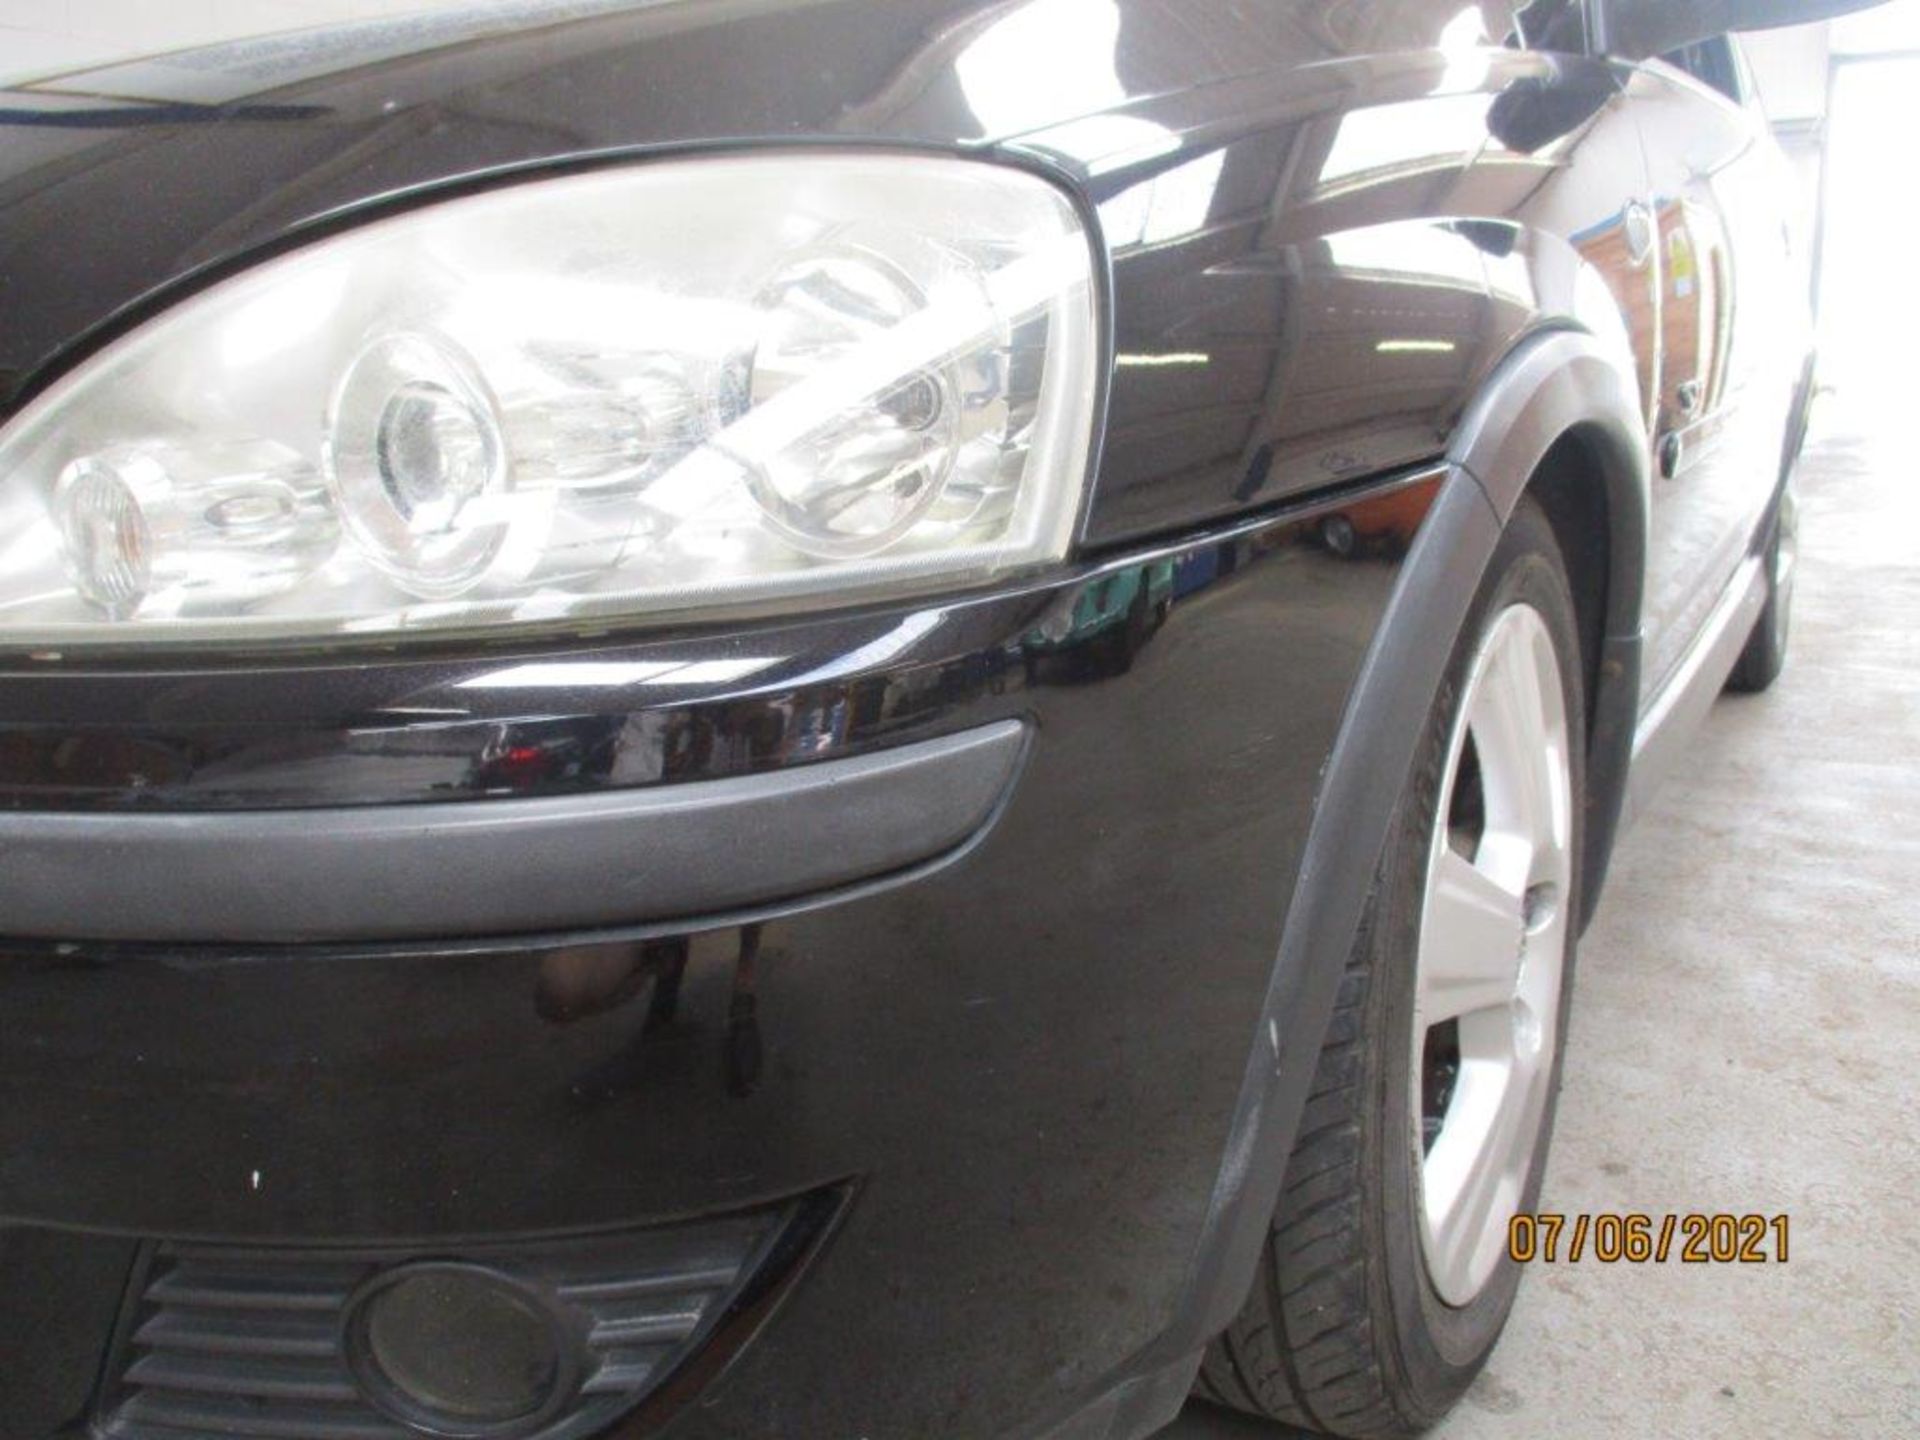 04 04 Vauxhall Corsa SXI - Image 3 of 17